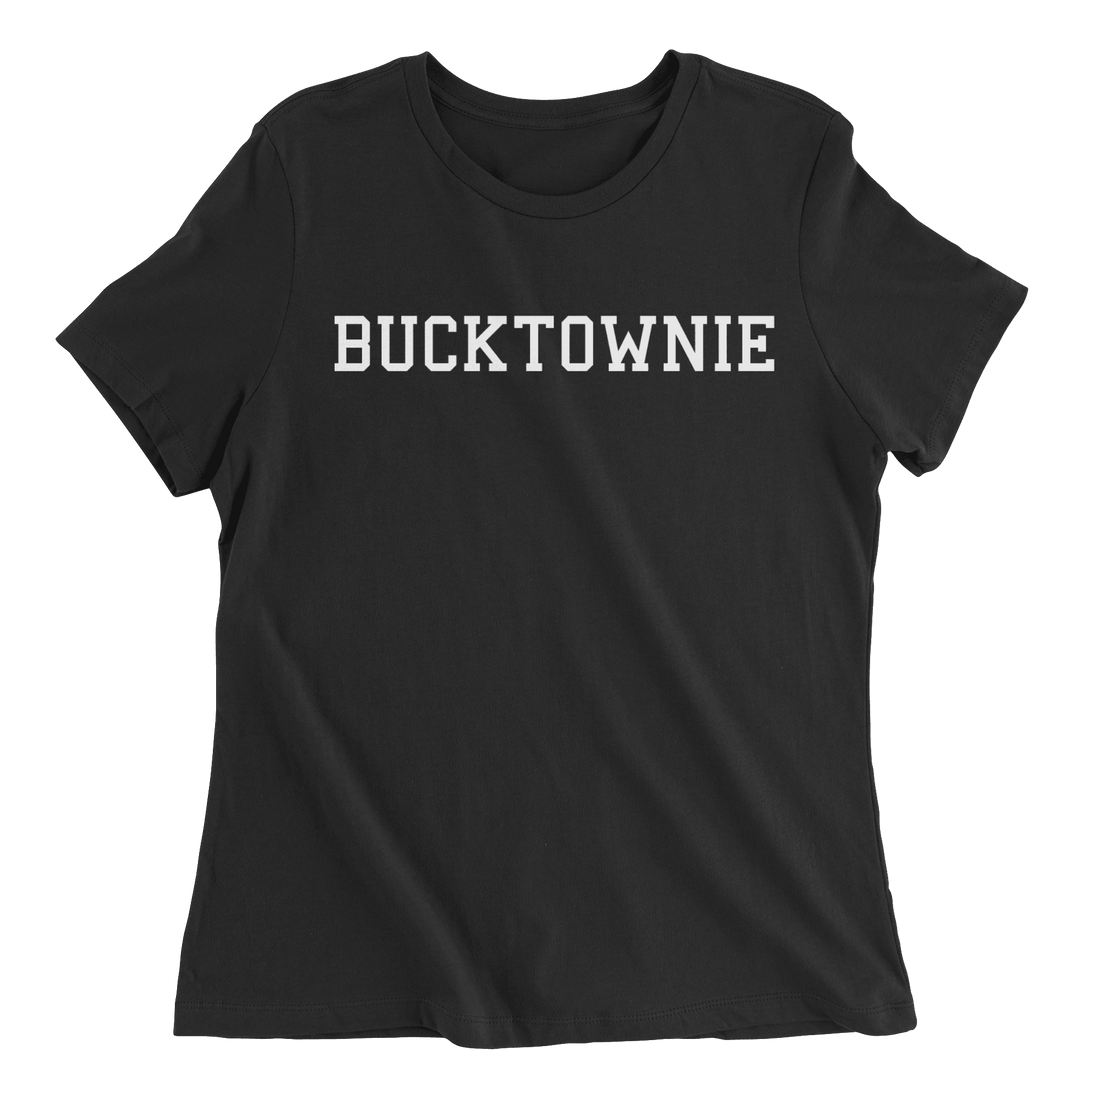 Bucktownie - The T-Shirt Deli, Co.